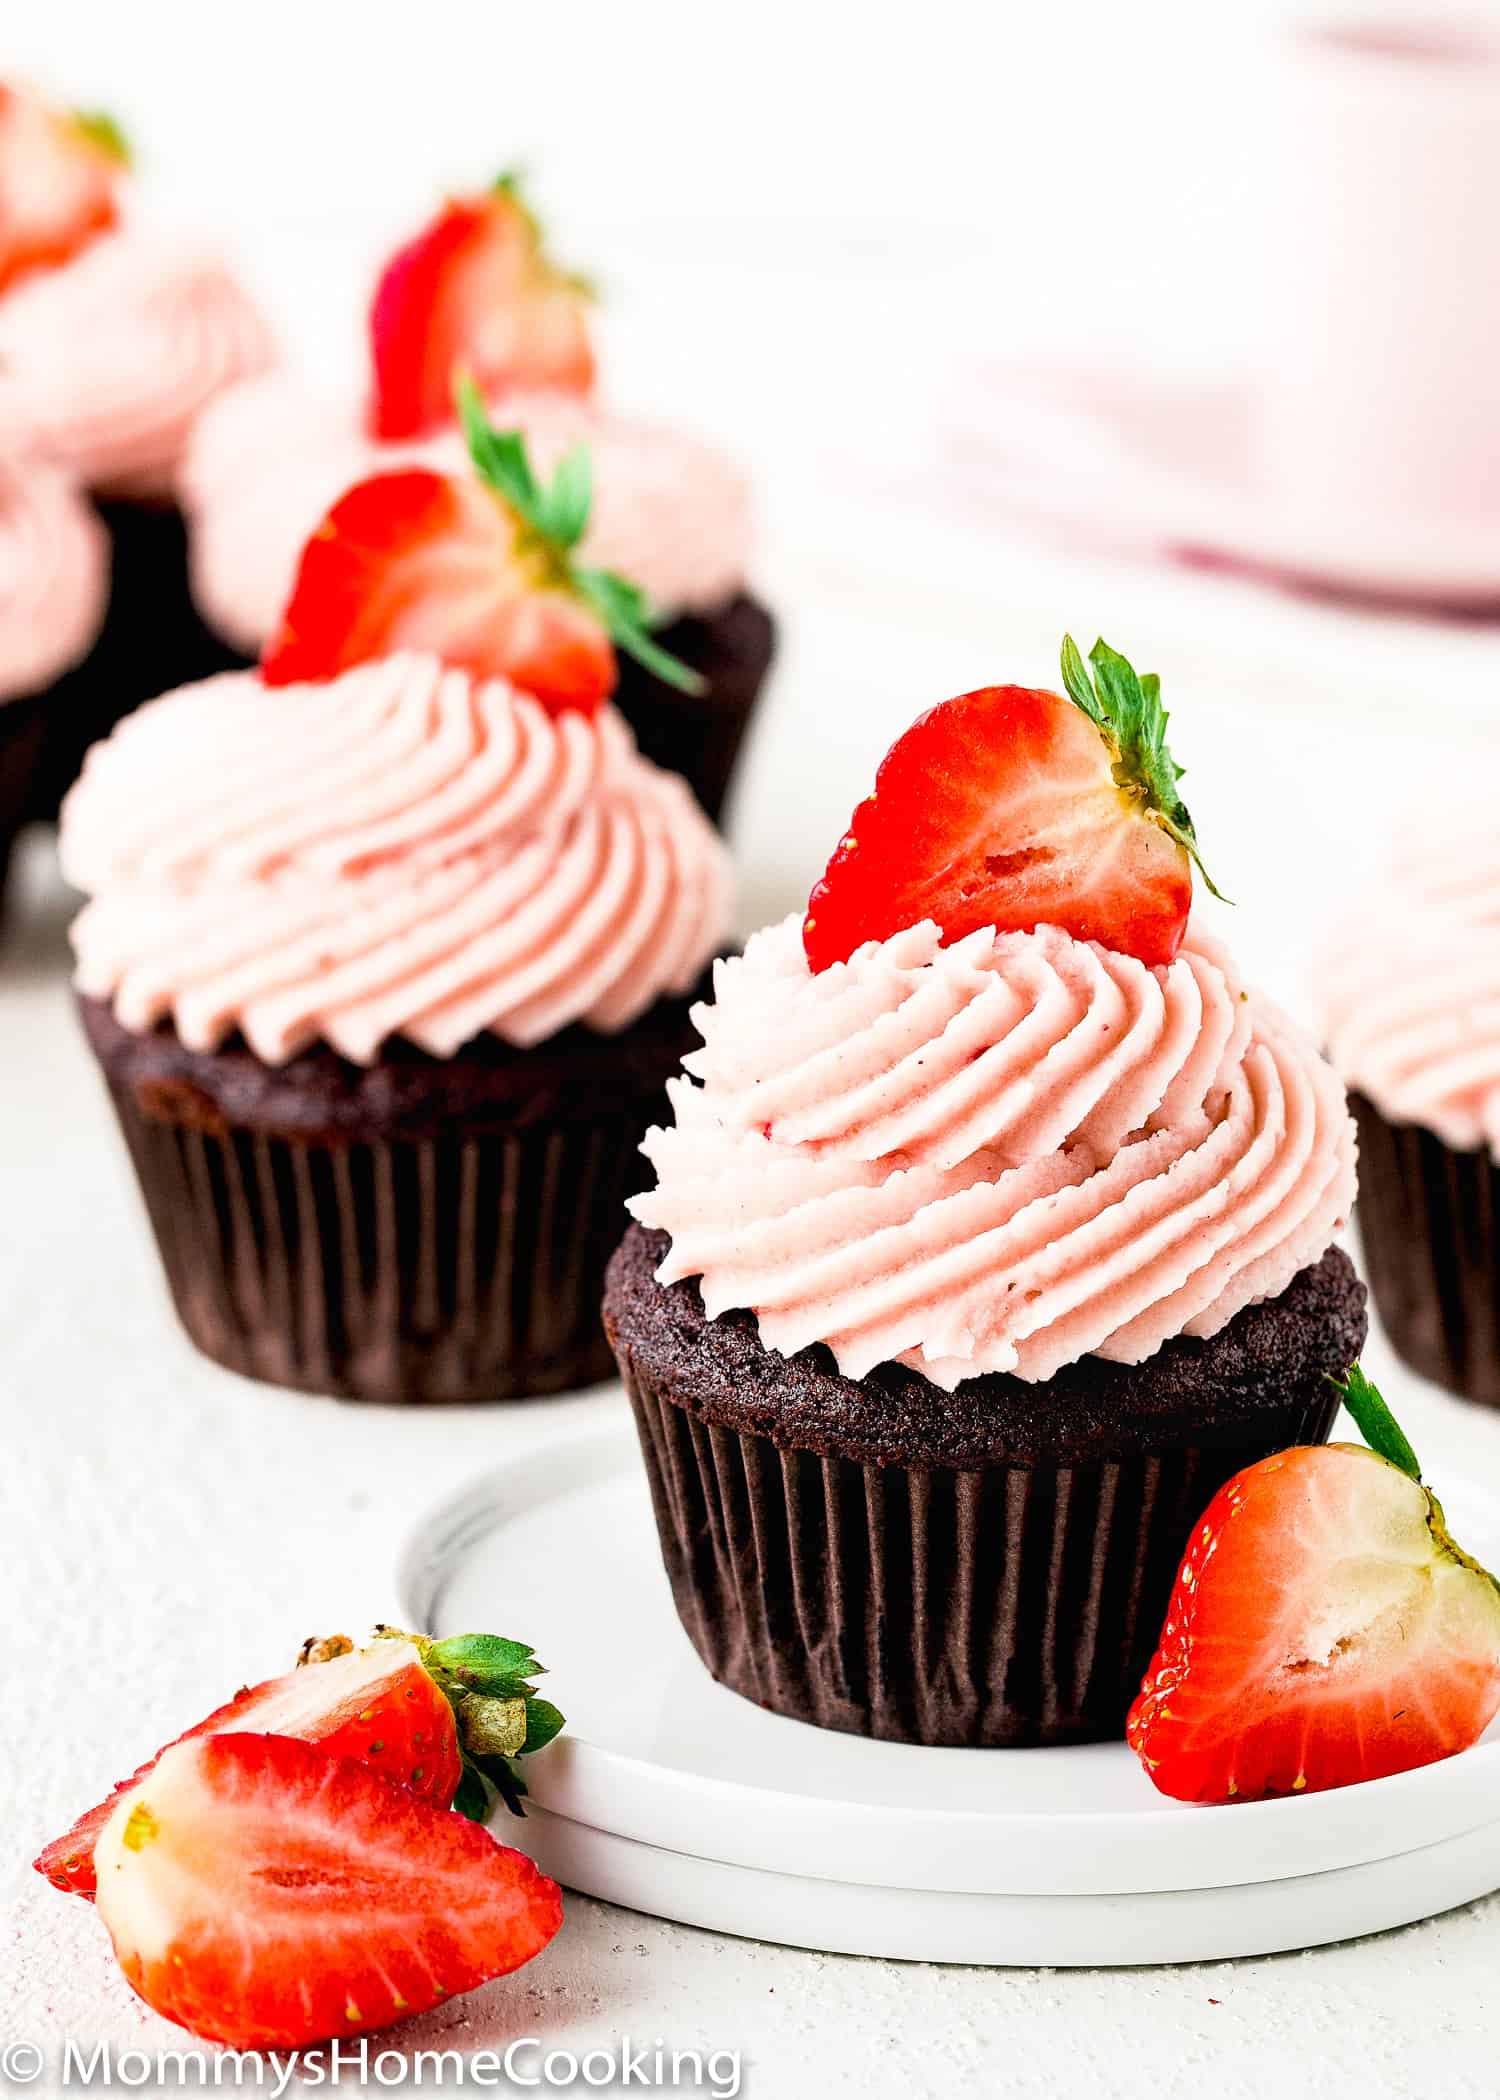 Eggless Chocolate Strawberry Cupcakes with fresh strawberries.